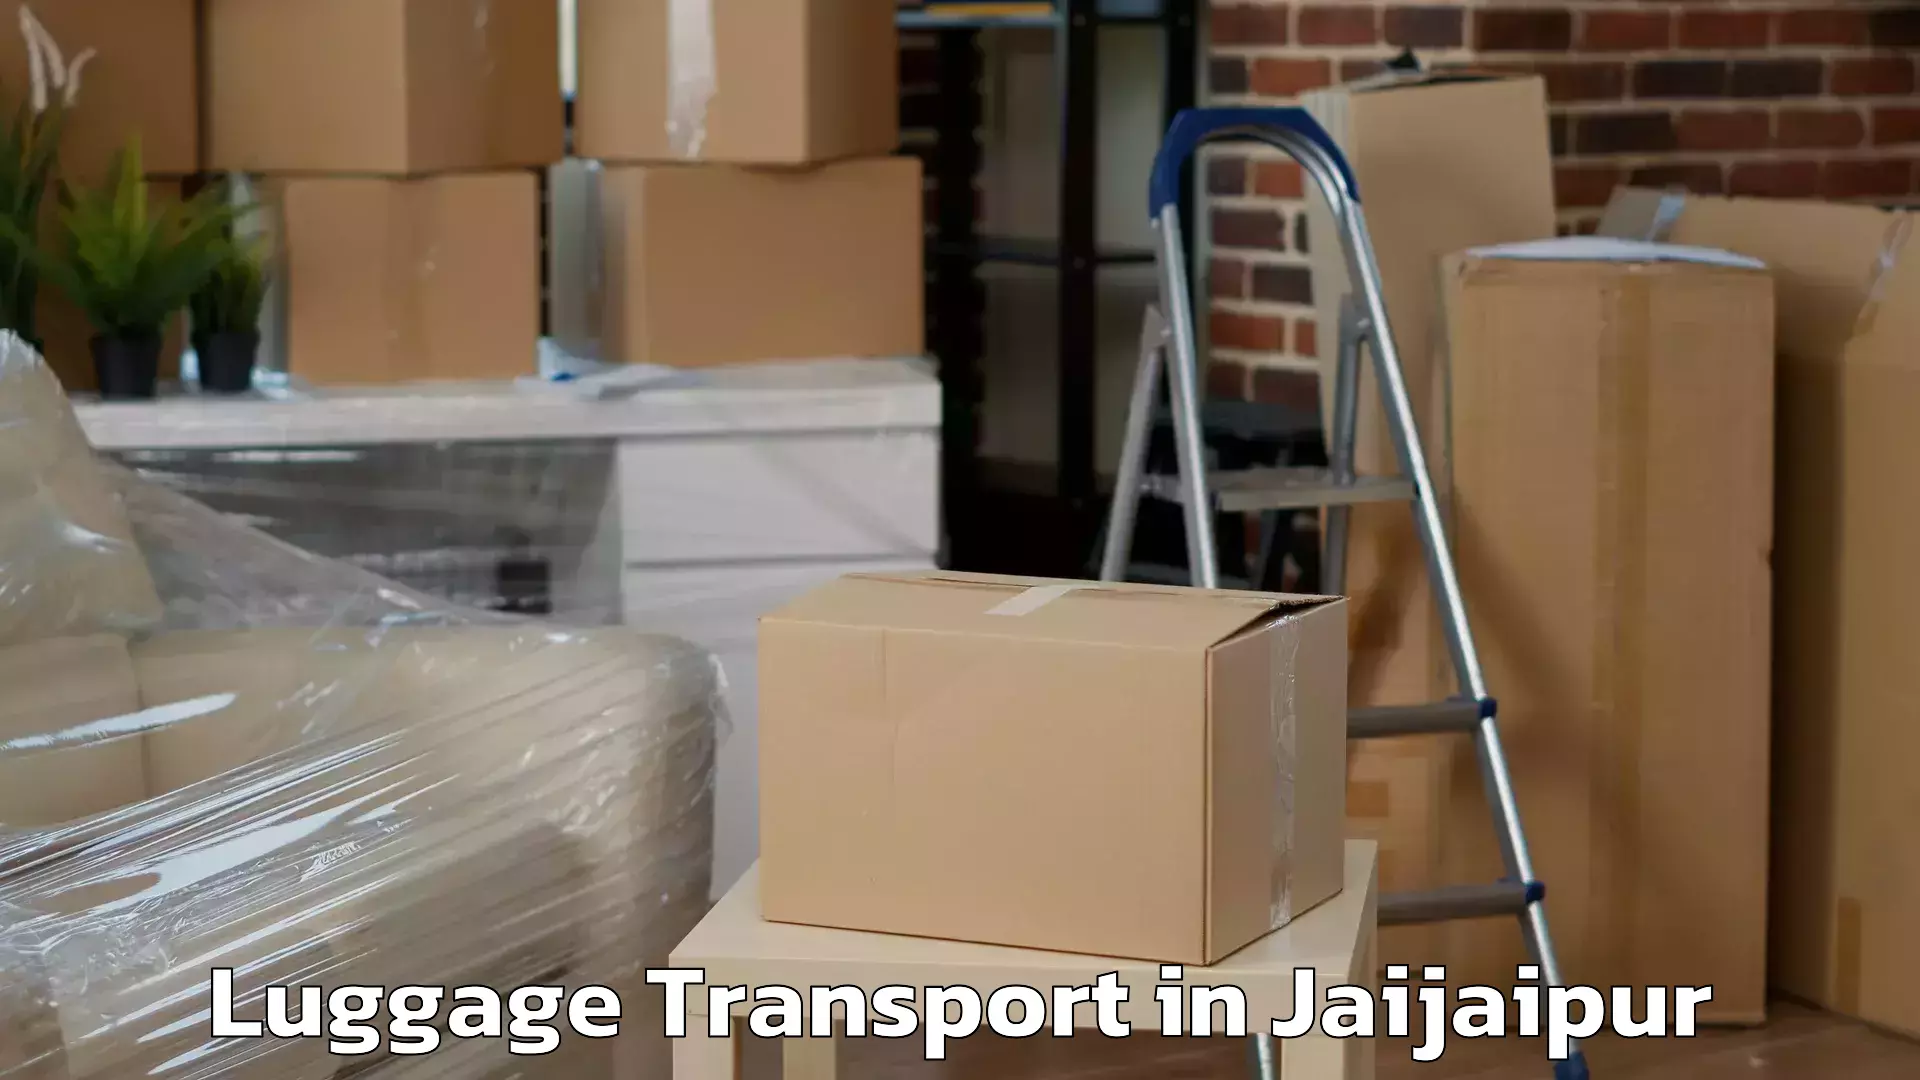 Luggage transport logistics in Jaijaipur